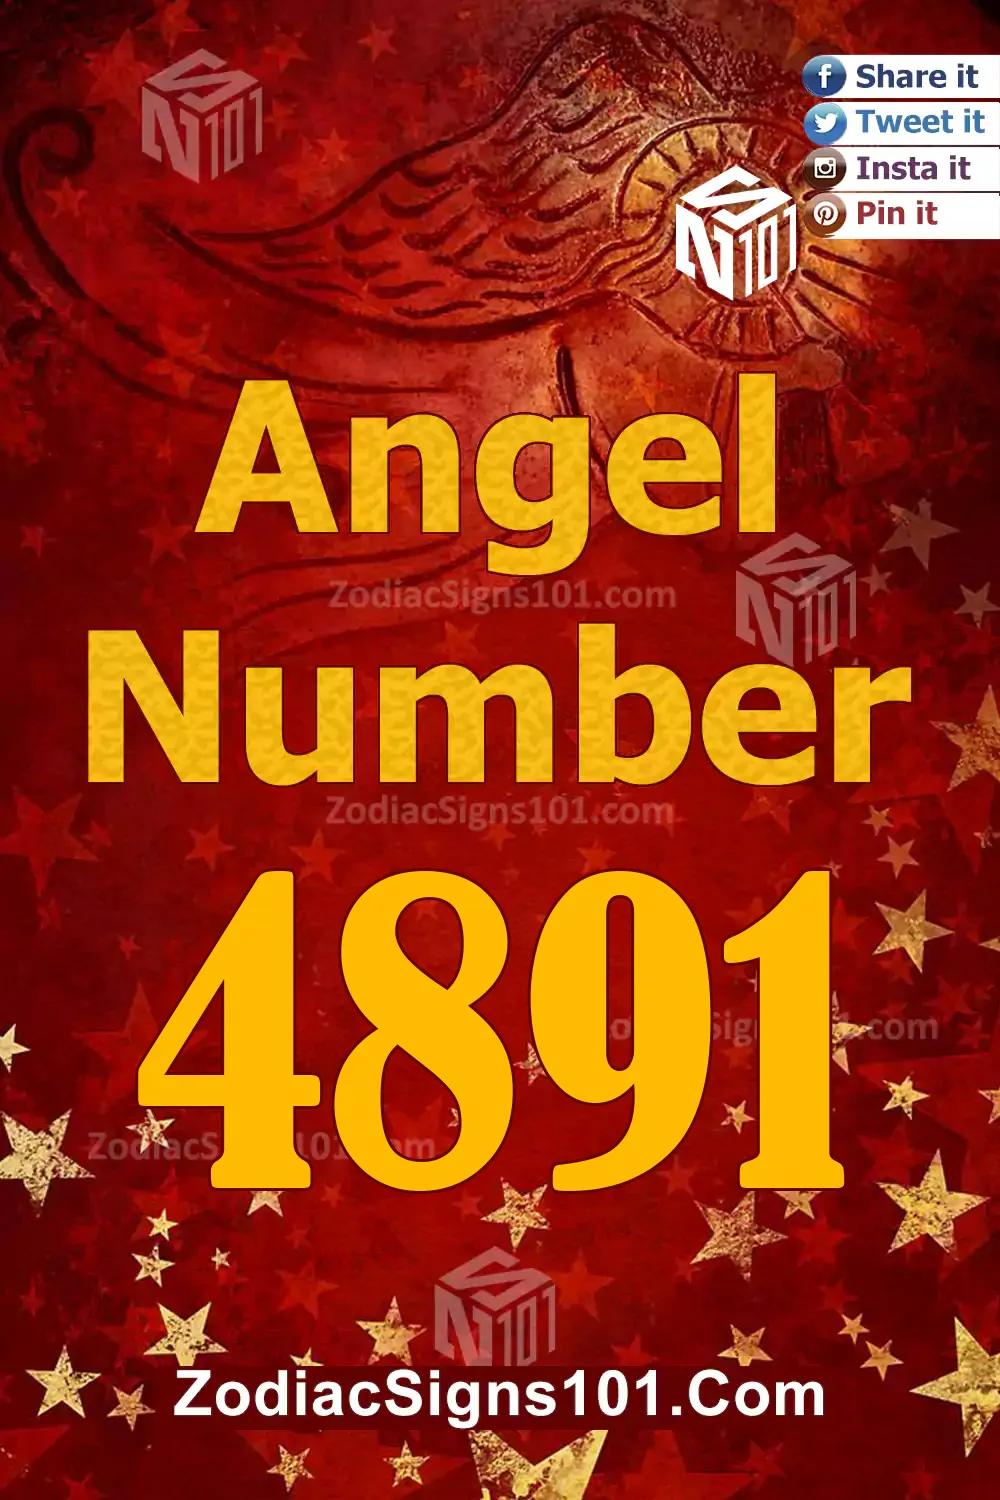 4891-Angel-Number-Meaning.jpg